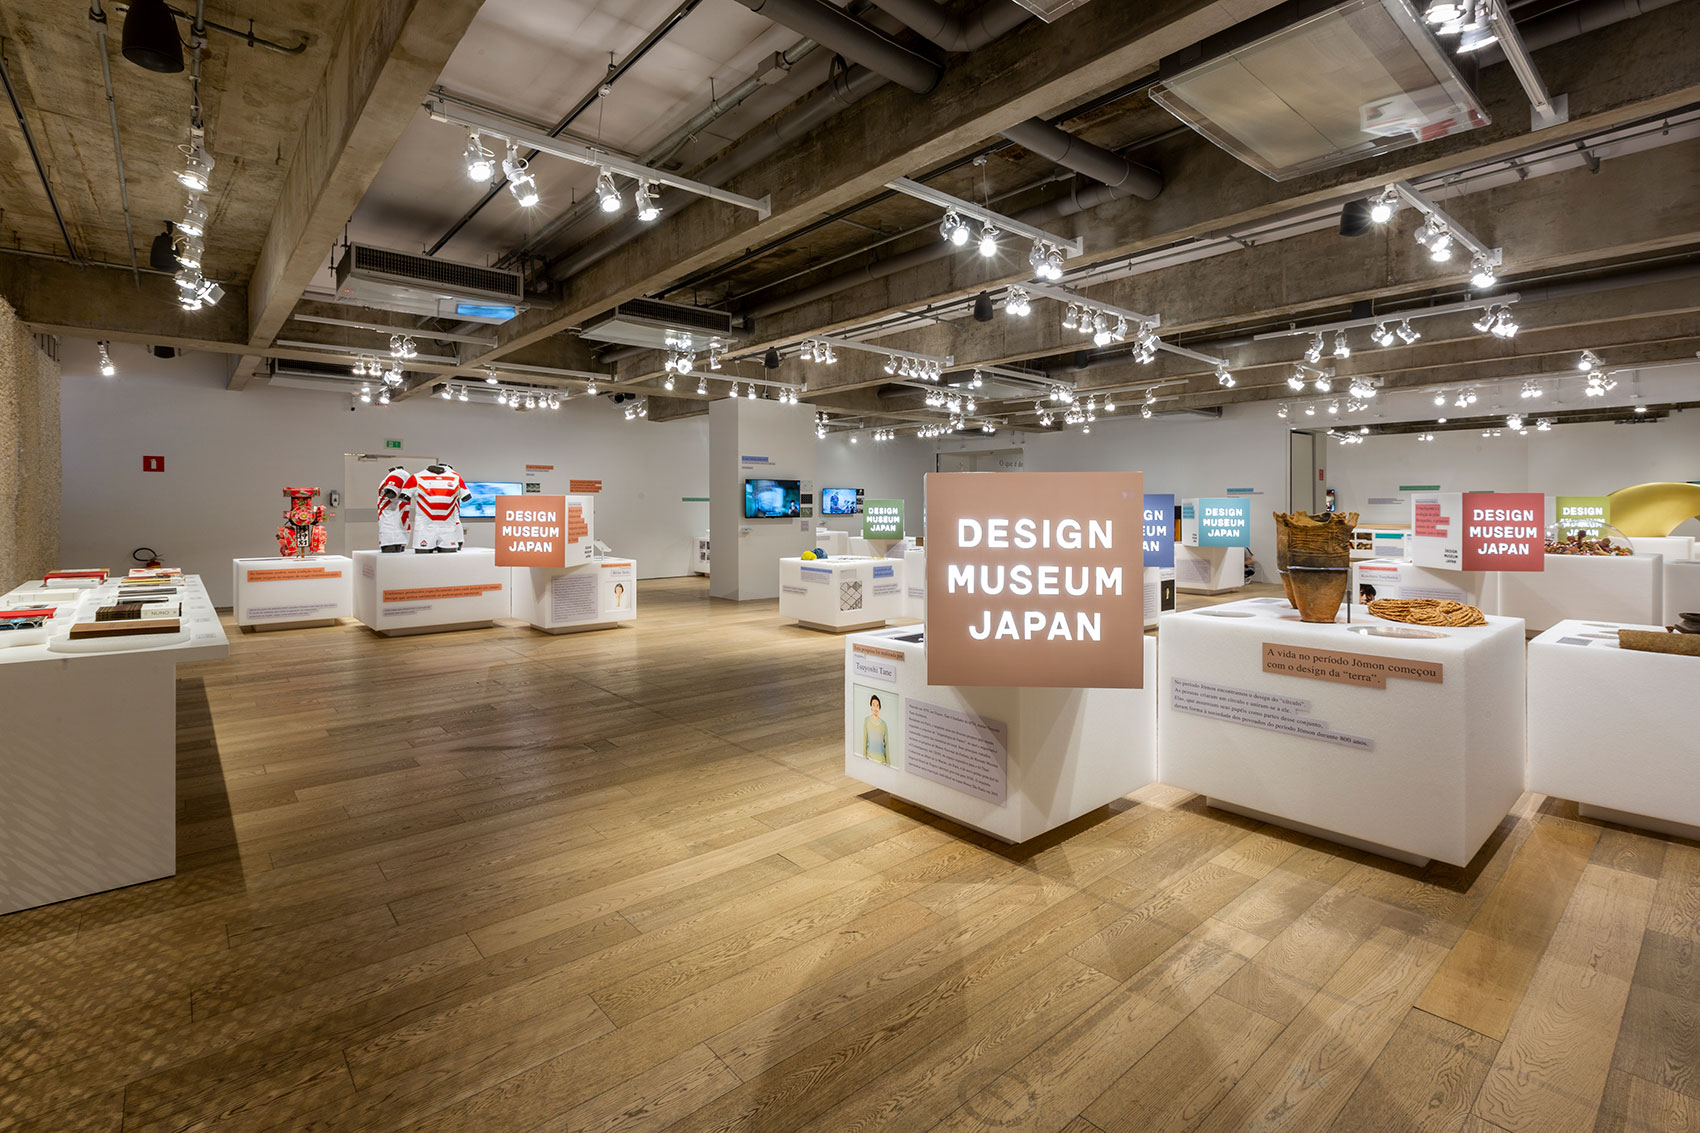 「DESIGN MUSEUM JAPAN:日本のデザインを探る」展